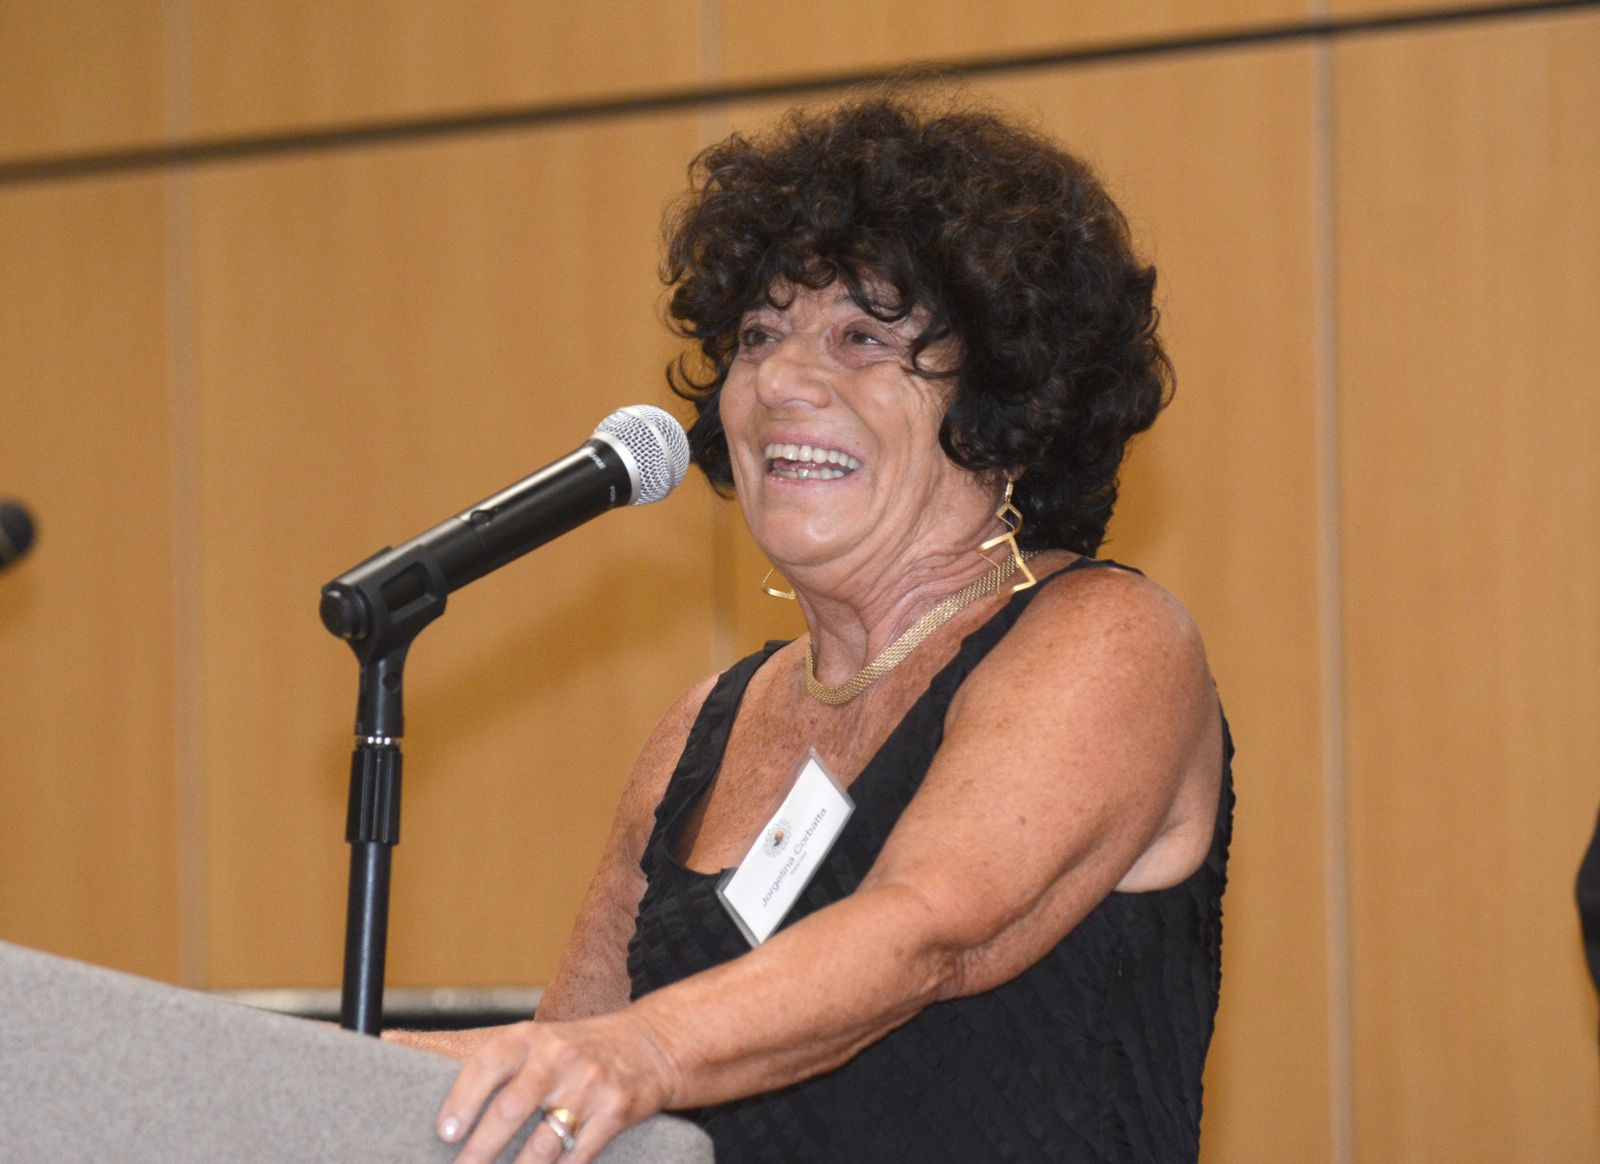 Professor Jorgelina Corbatta at the podium